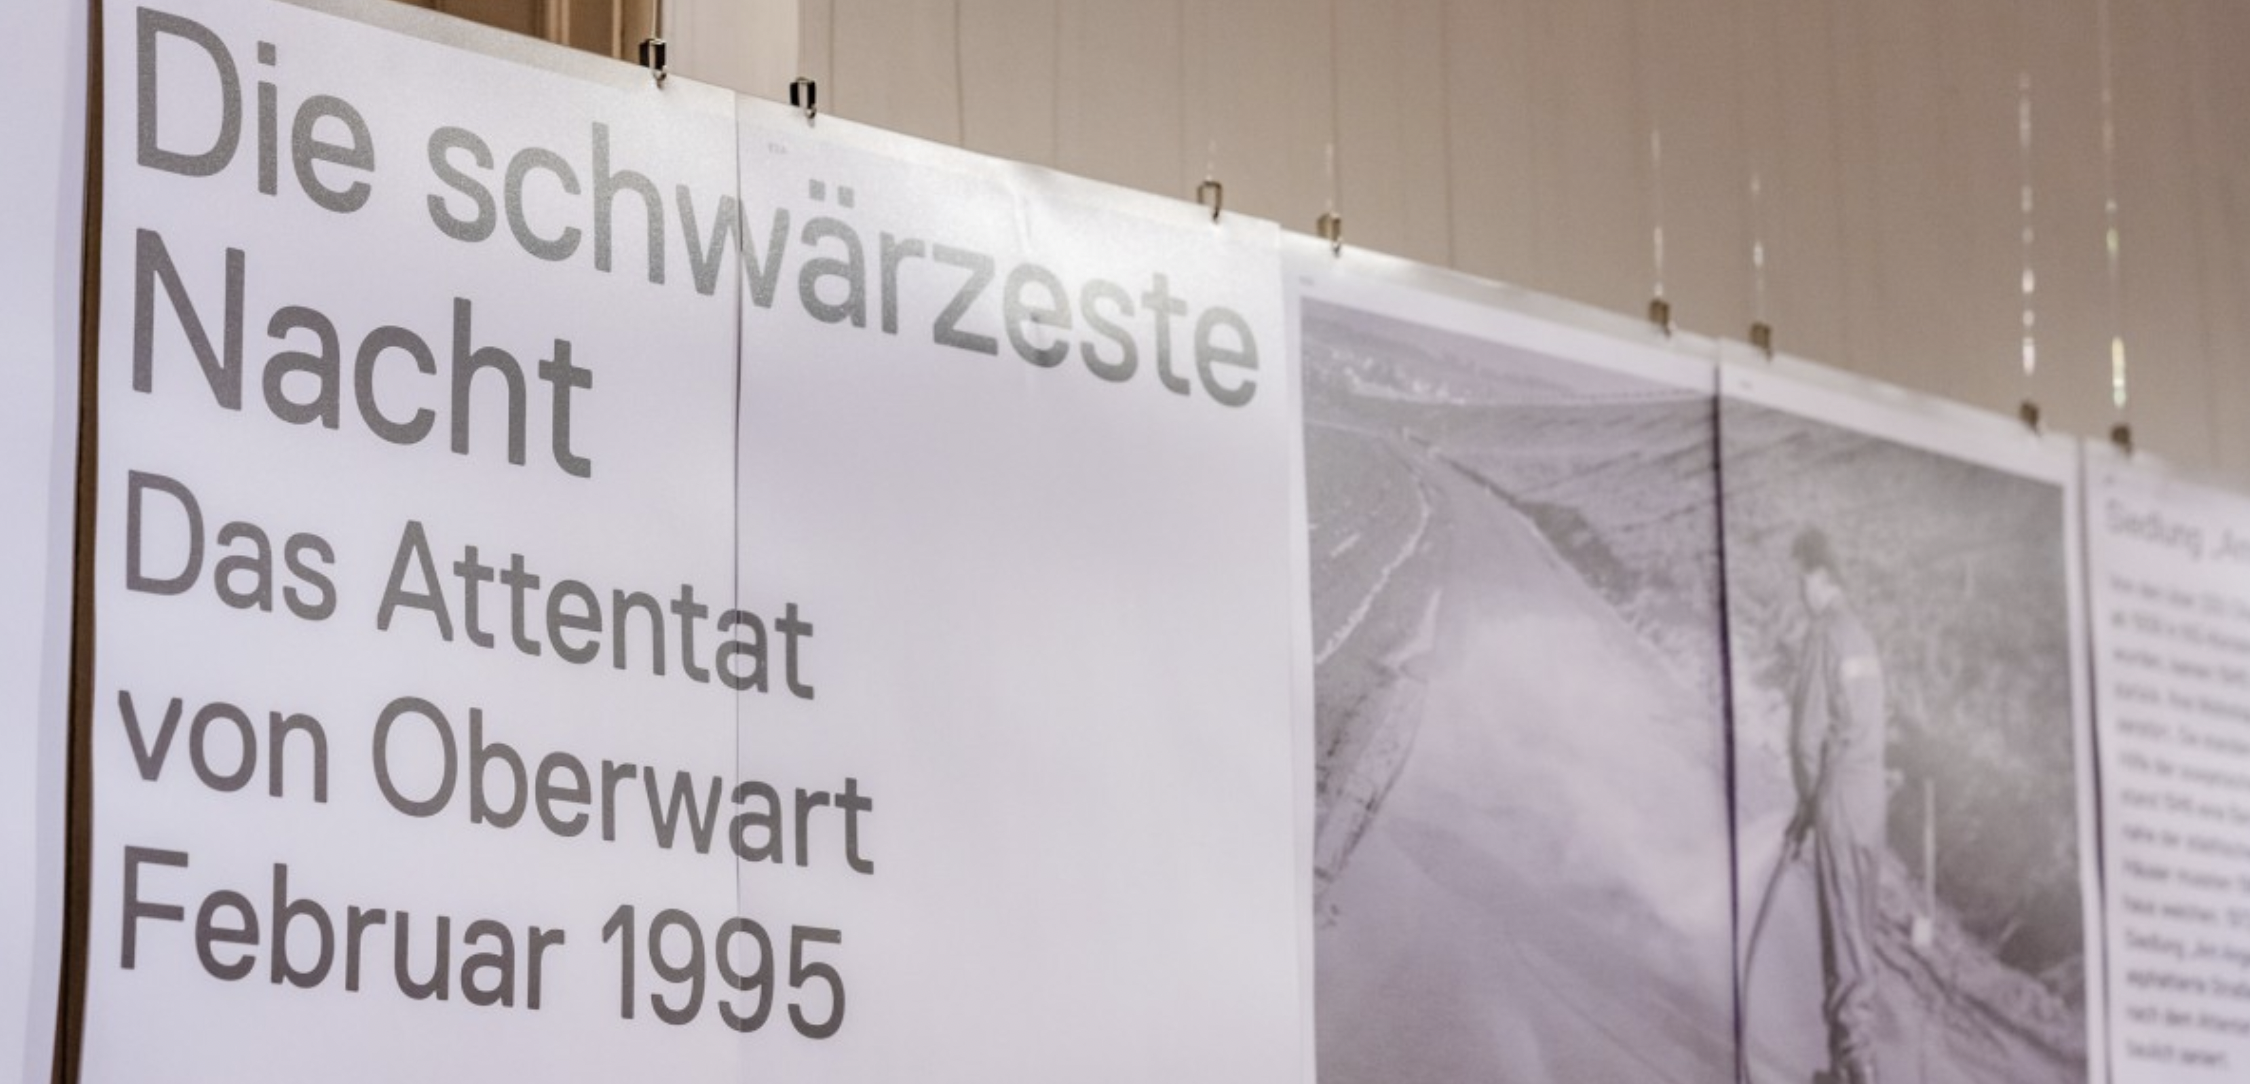 Ausstellung "Man will uns ans Leben" Bomben gegen Minderheiten 1993-1996. (c) Foto: Kollektiv Fischka/Kramar/Volkskundemuseum Wien